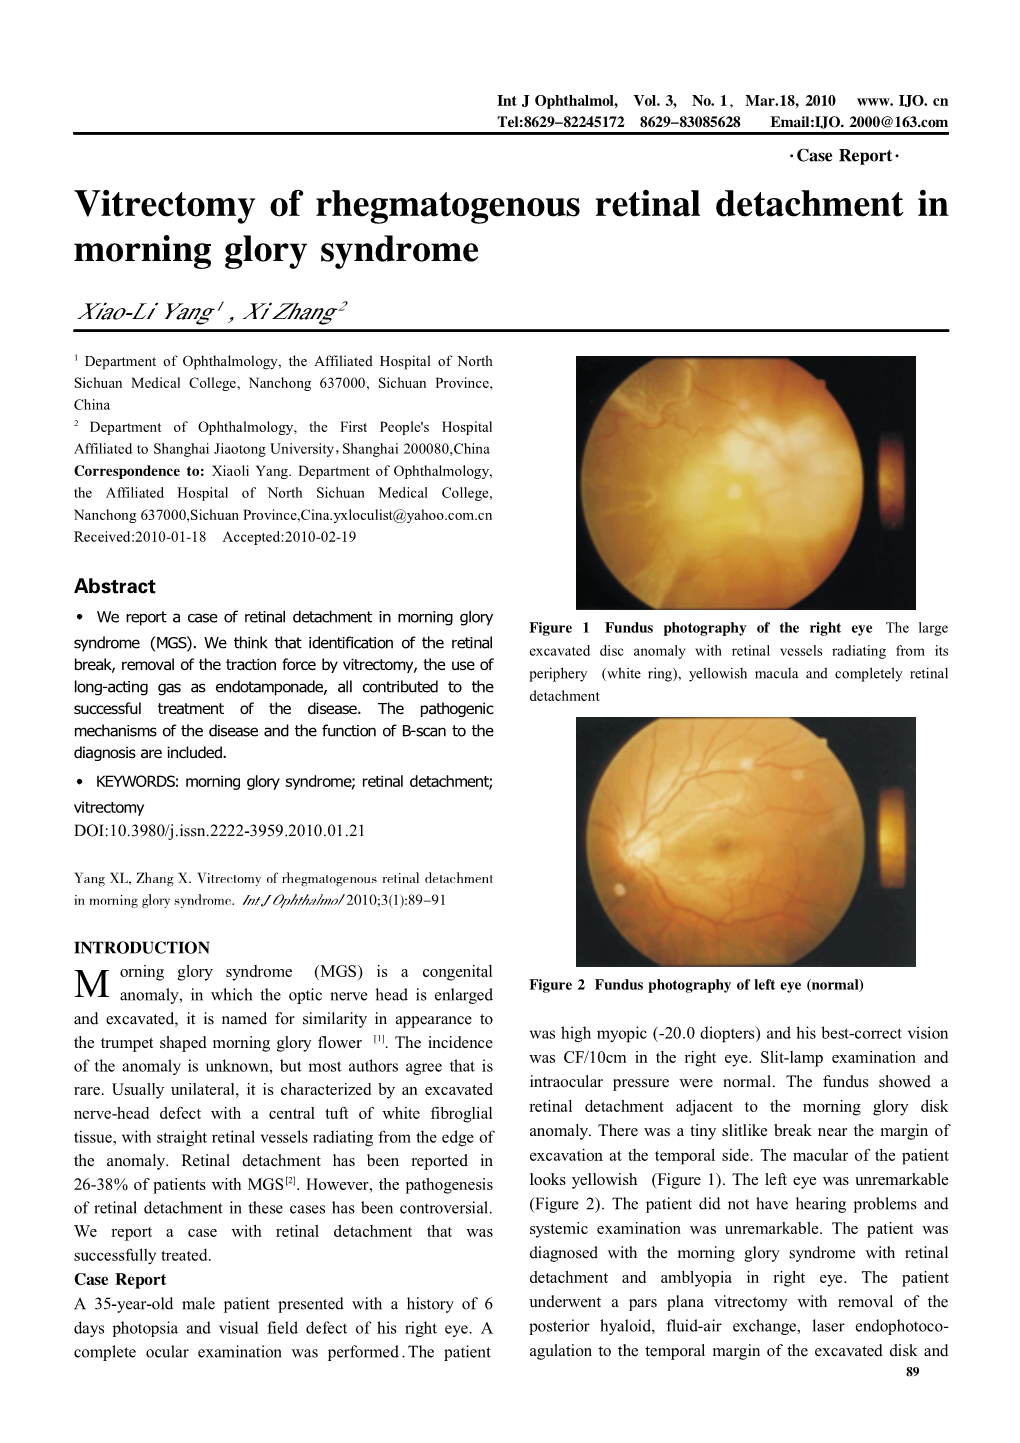 Vitrectomy of Rhegmatogenous Retinal Detachment in Morning Glory